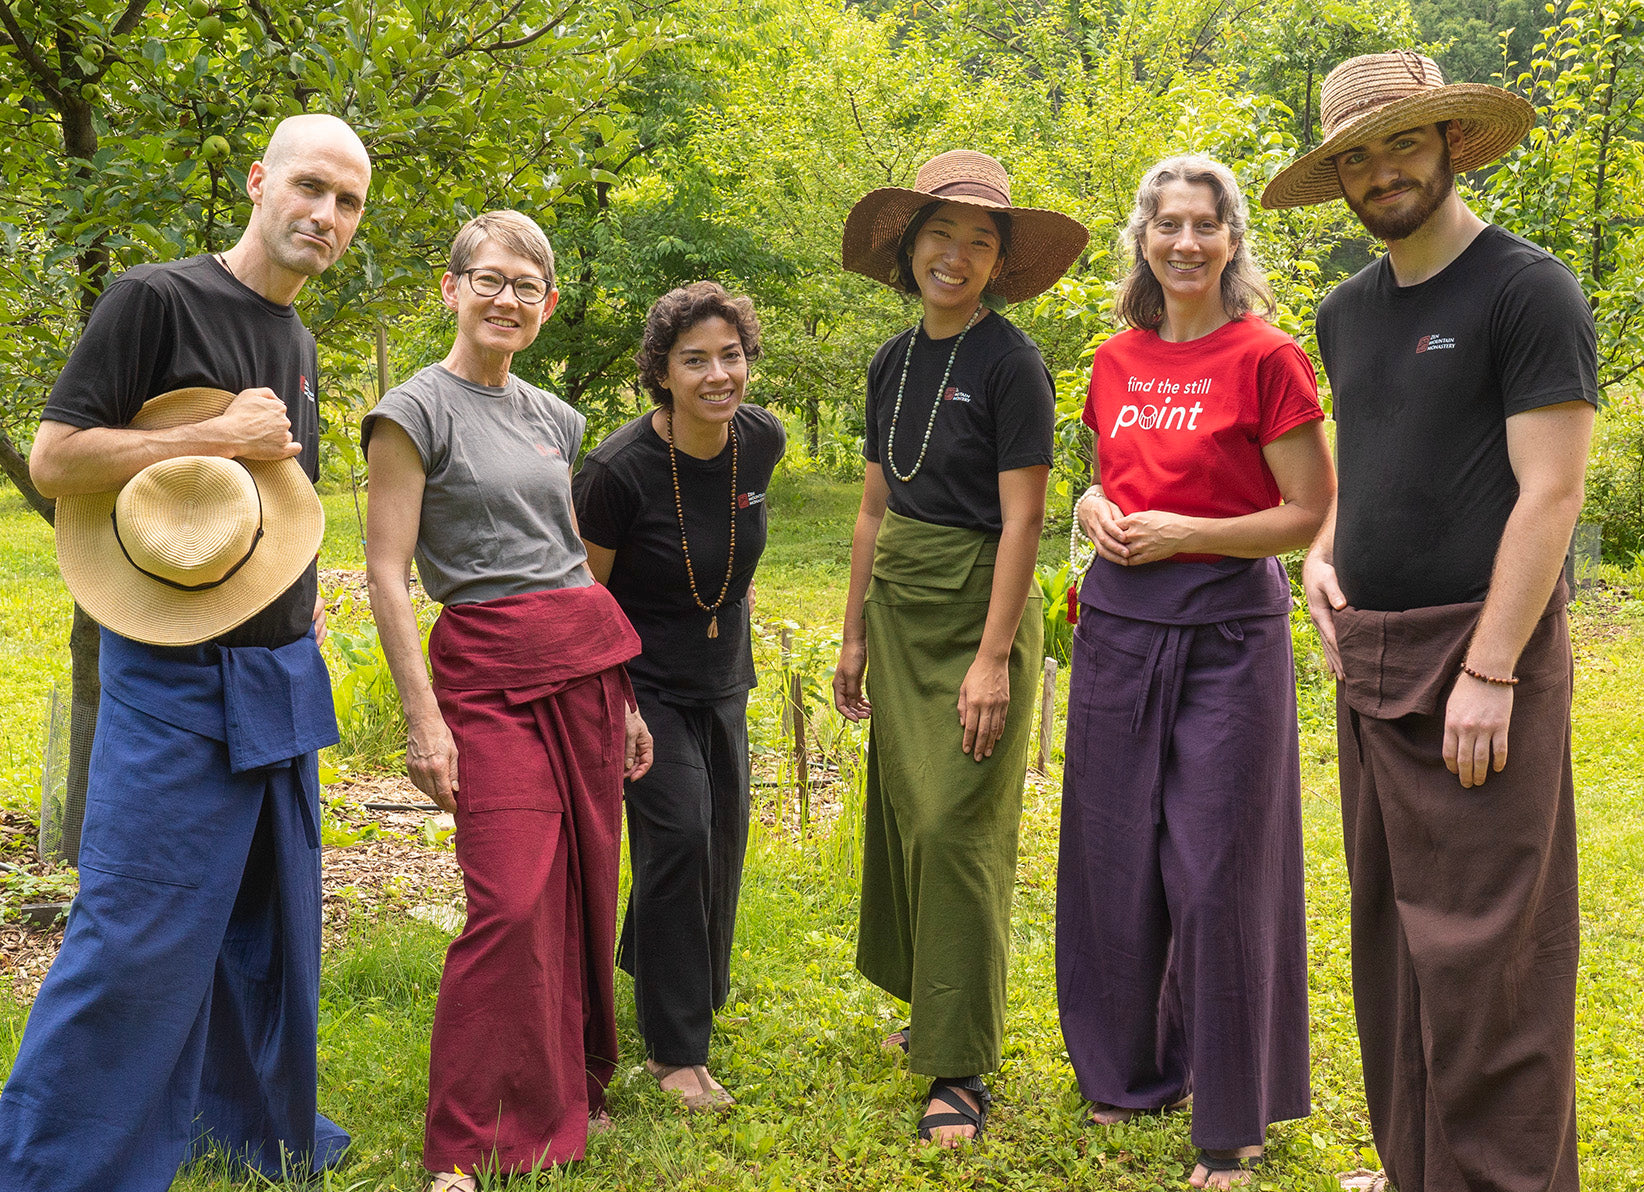 Thai Fisherman Pants Thai Tea Color for Unisex, Yoga Pants, Maternity Pants,  Cotton Pants, Spa Pants 